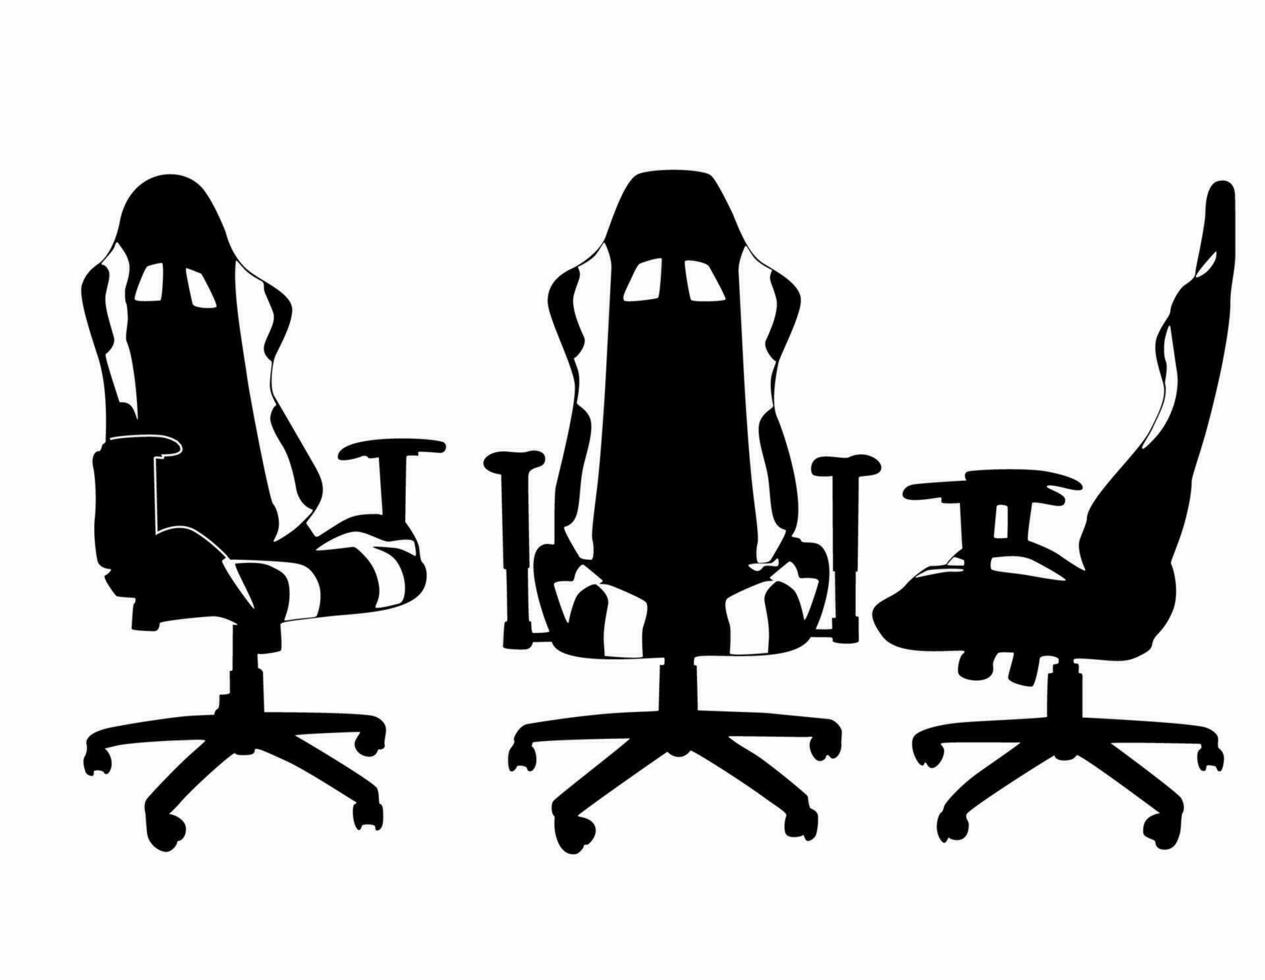 grupo de negro silla siluetas vector conjunto en blanco fondo, logotipos, íconos